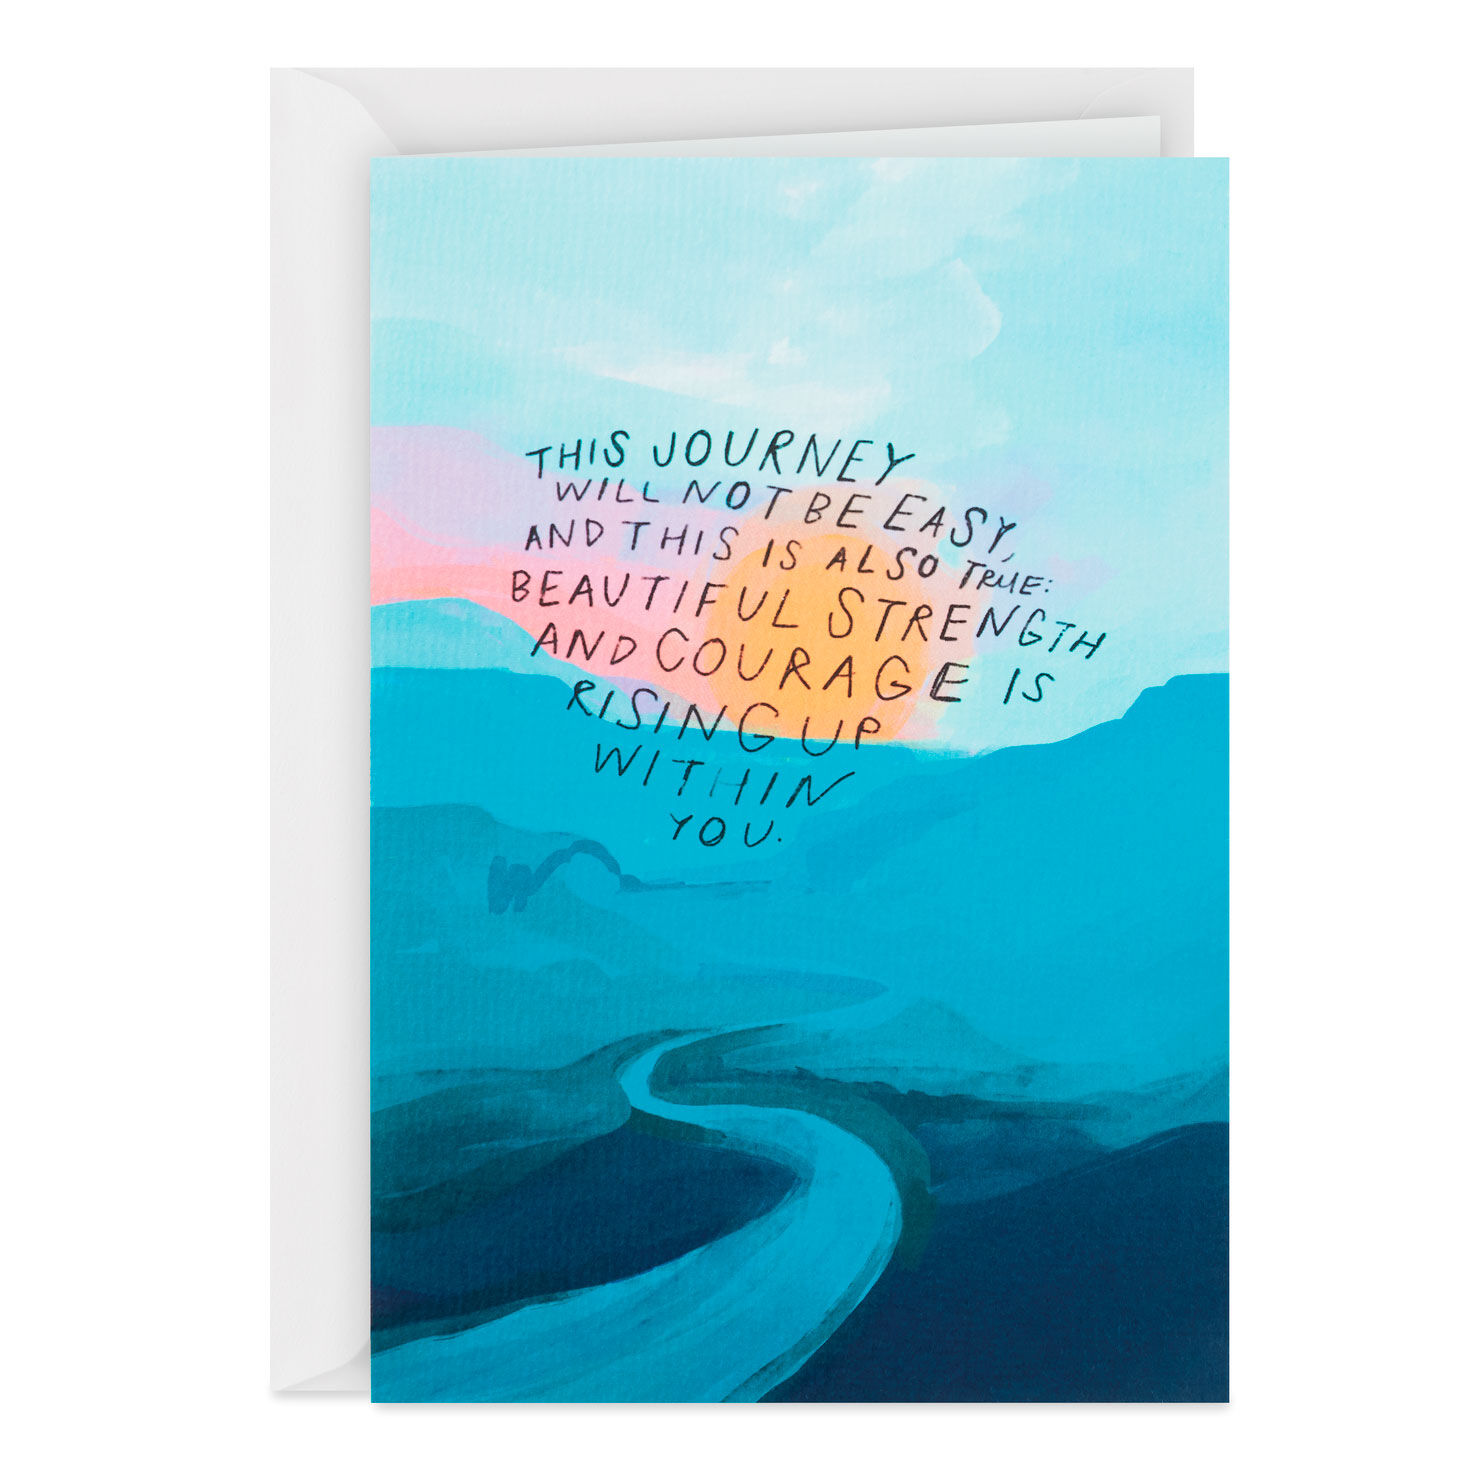 Morgan Harper Nichols Strength on Your Journey Encouragement Card for only USD 3.99 | Hallmark